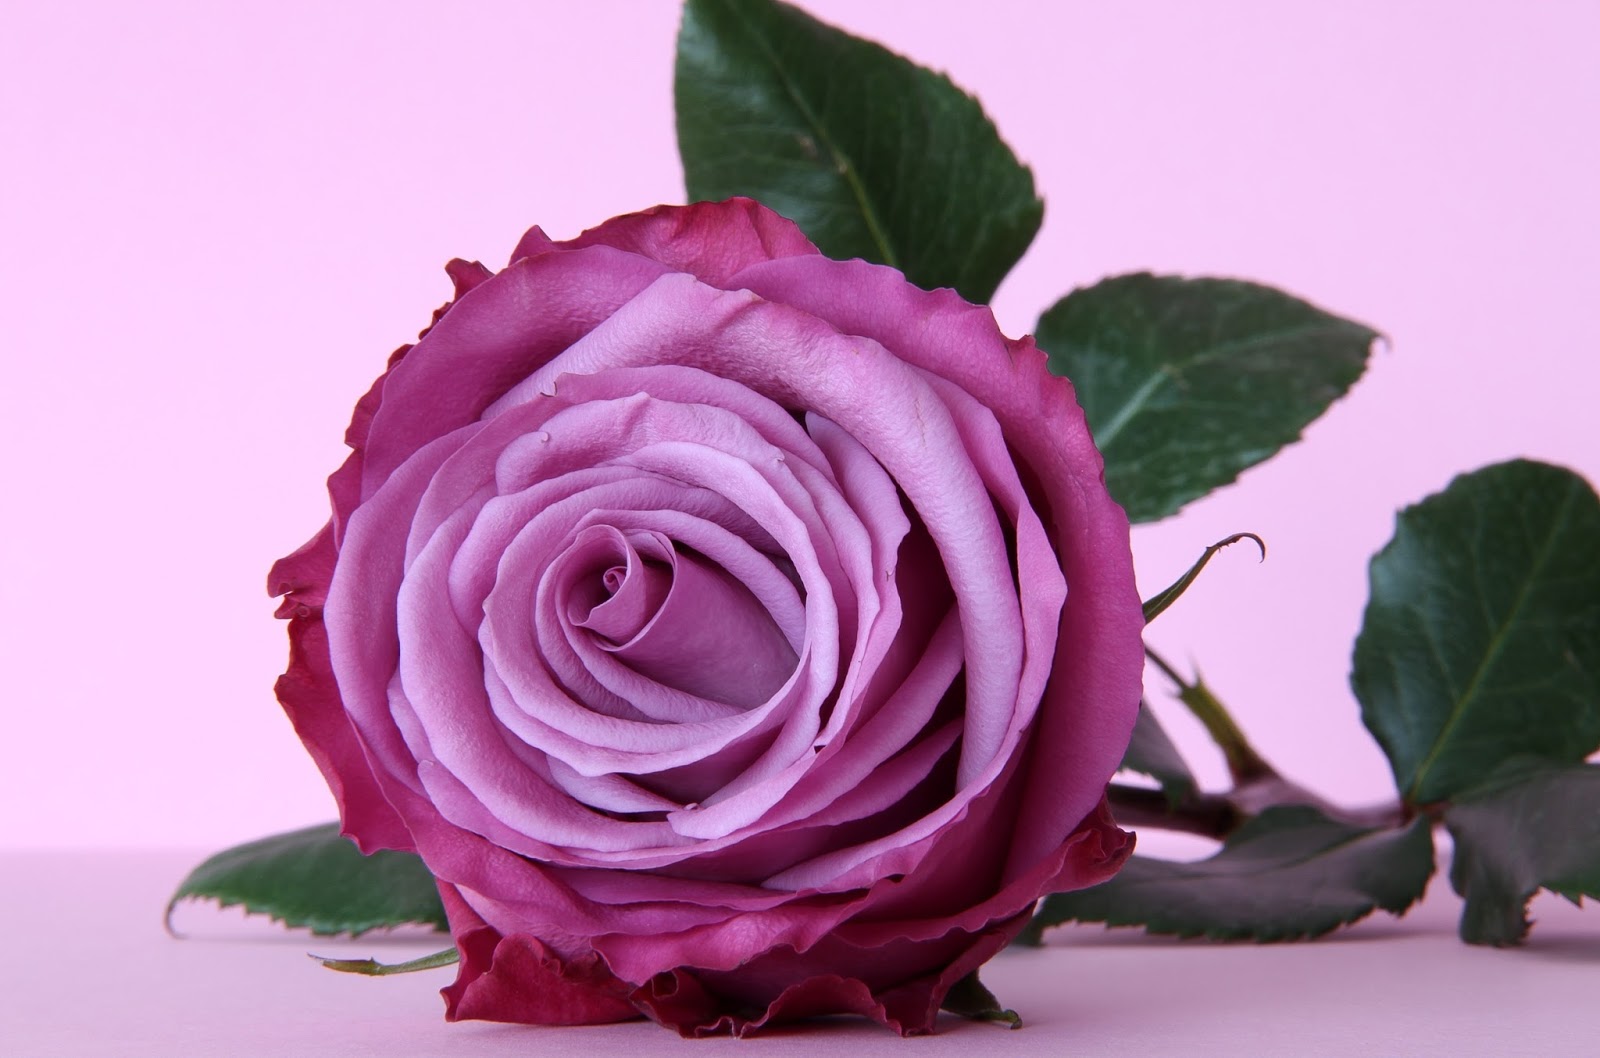 purple rose wallpaper hd,flower,flowering plant,garden roses,rose,pink